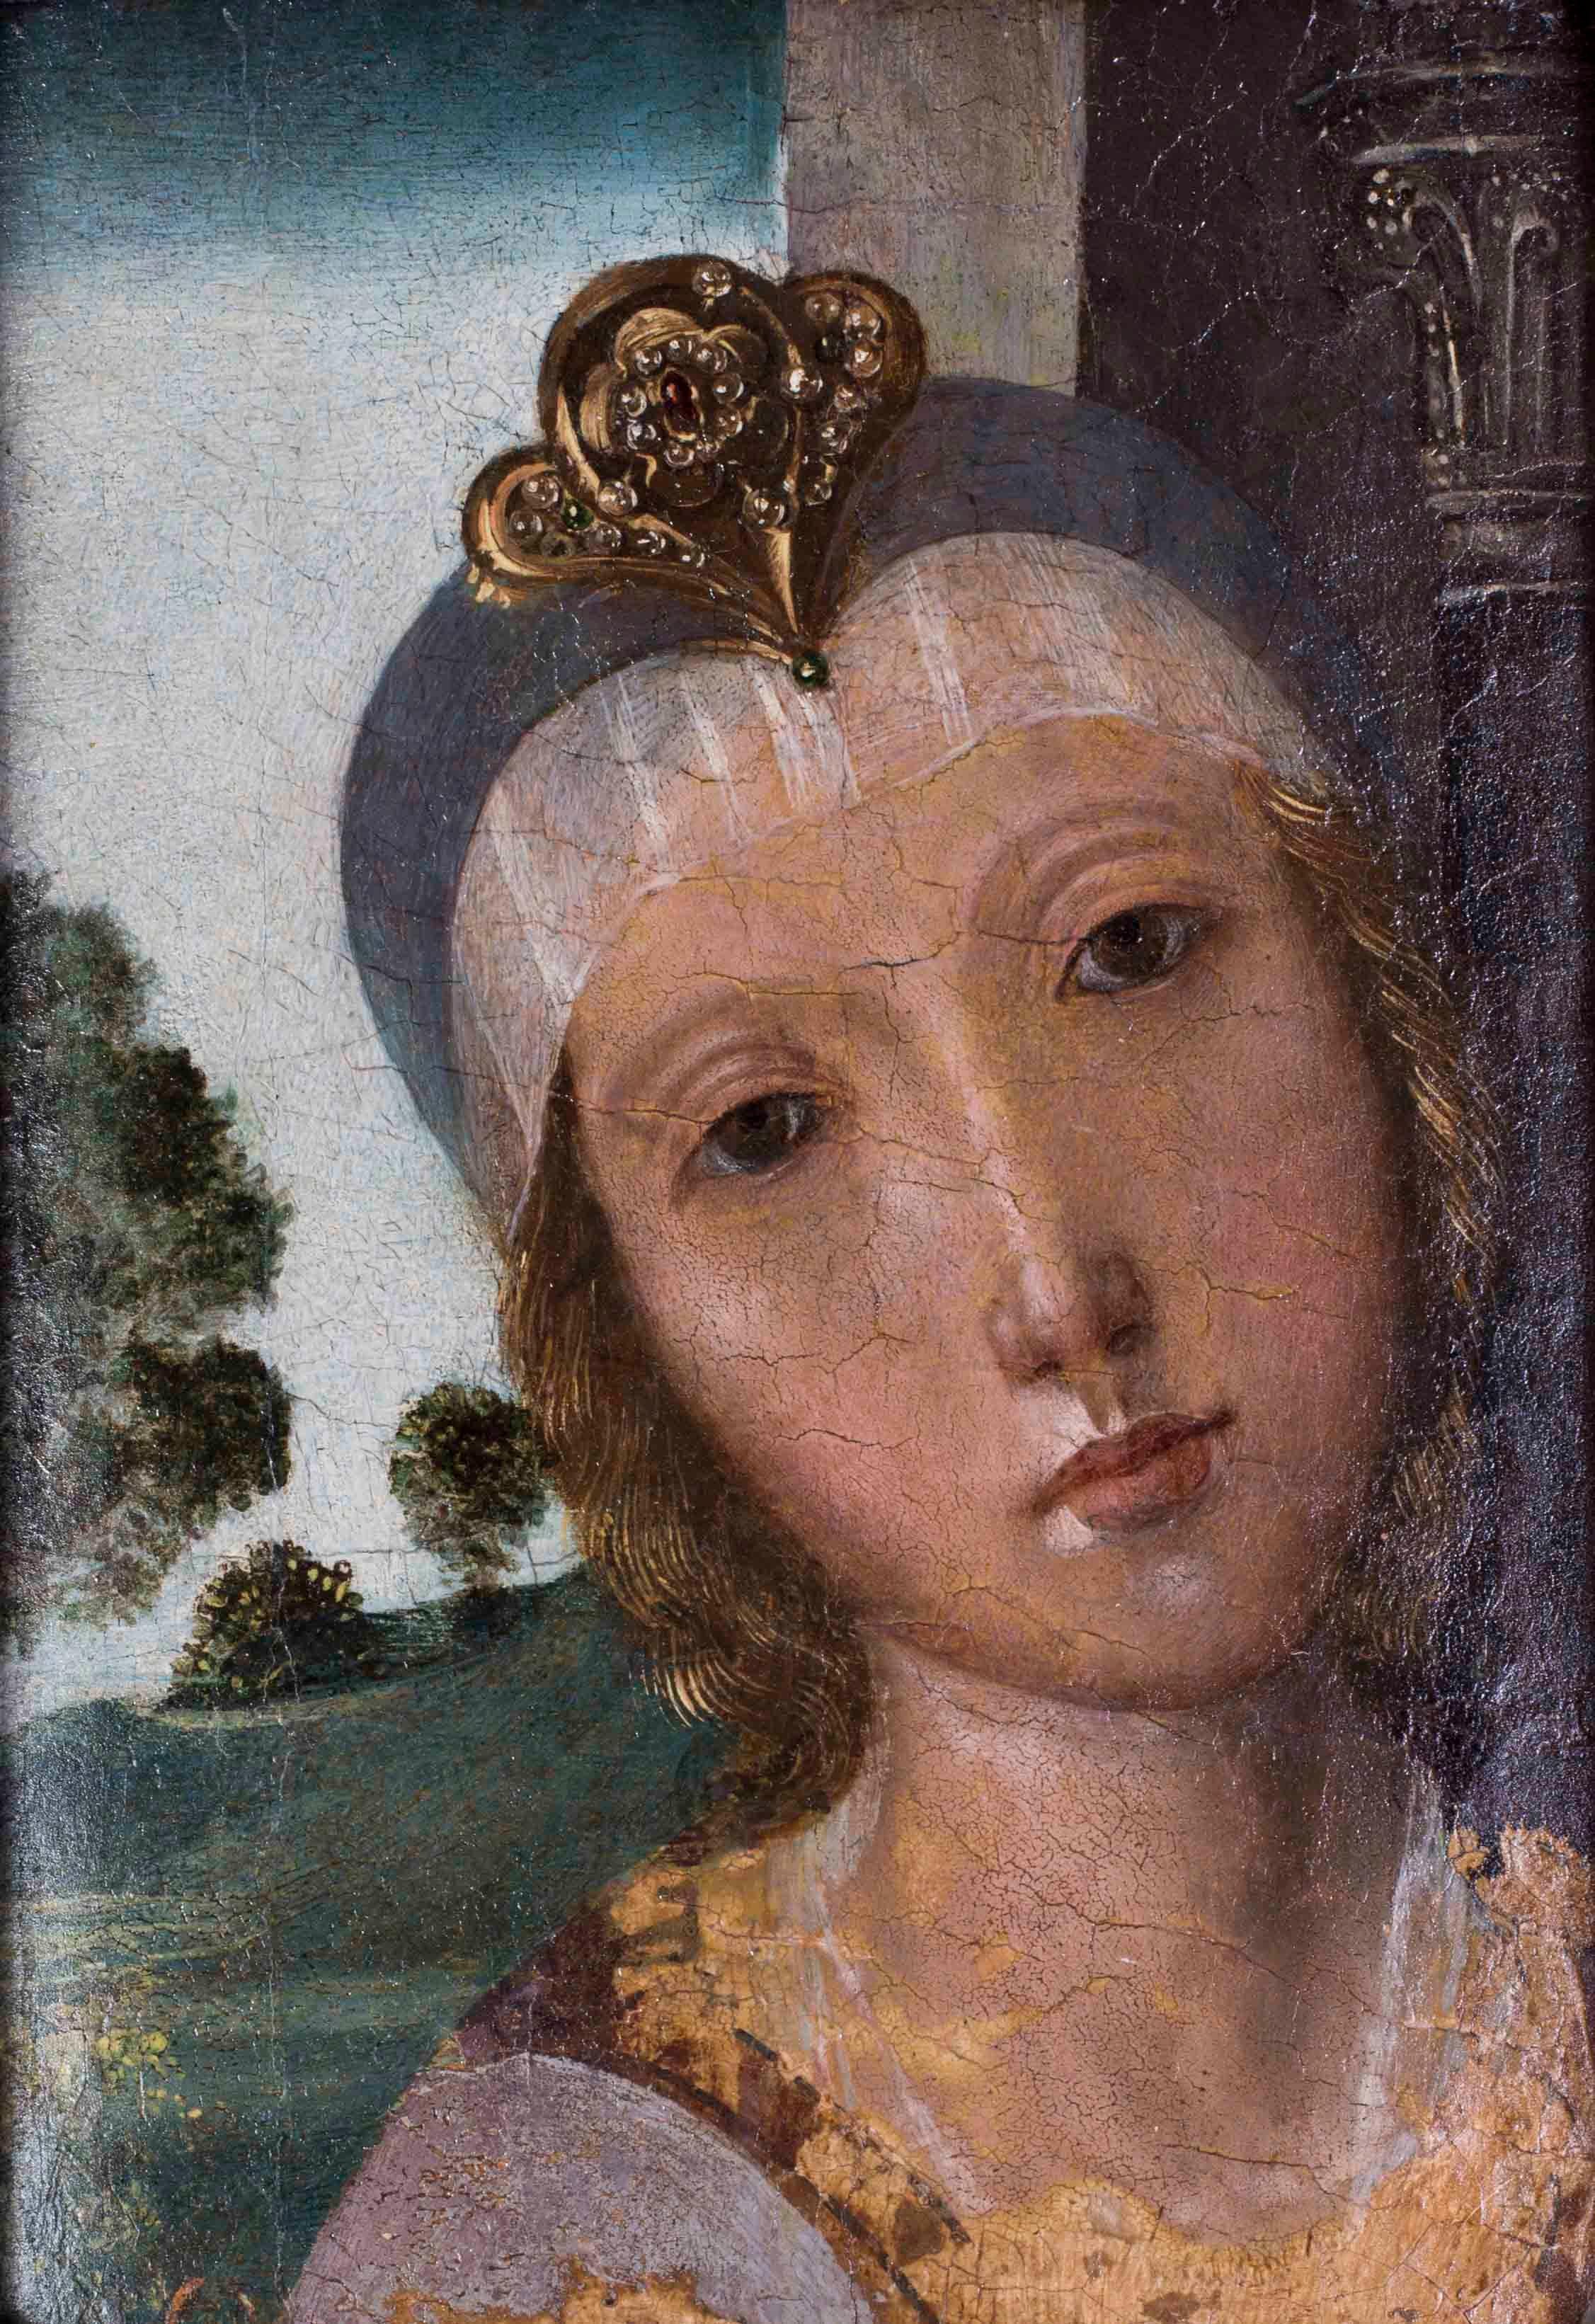 Italian Old Master portrait in the manner of Botticelli, oil on panel 2